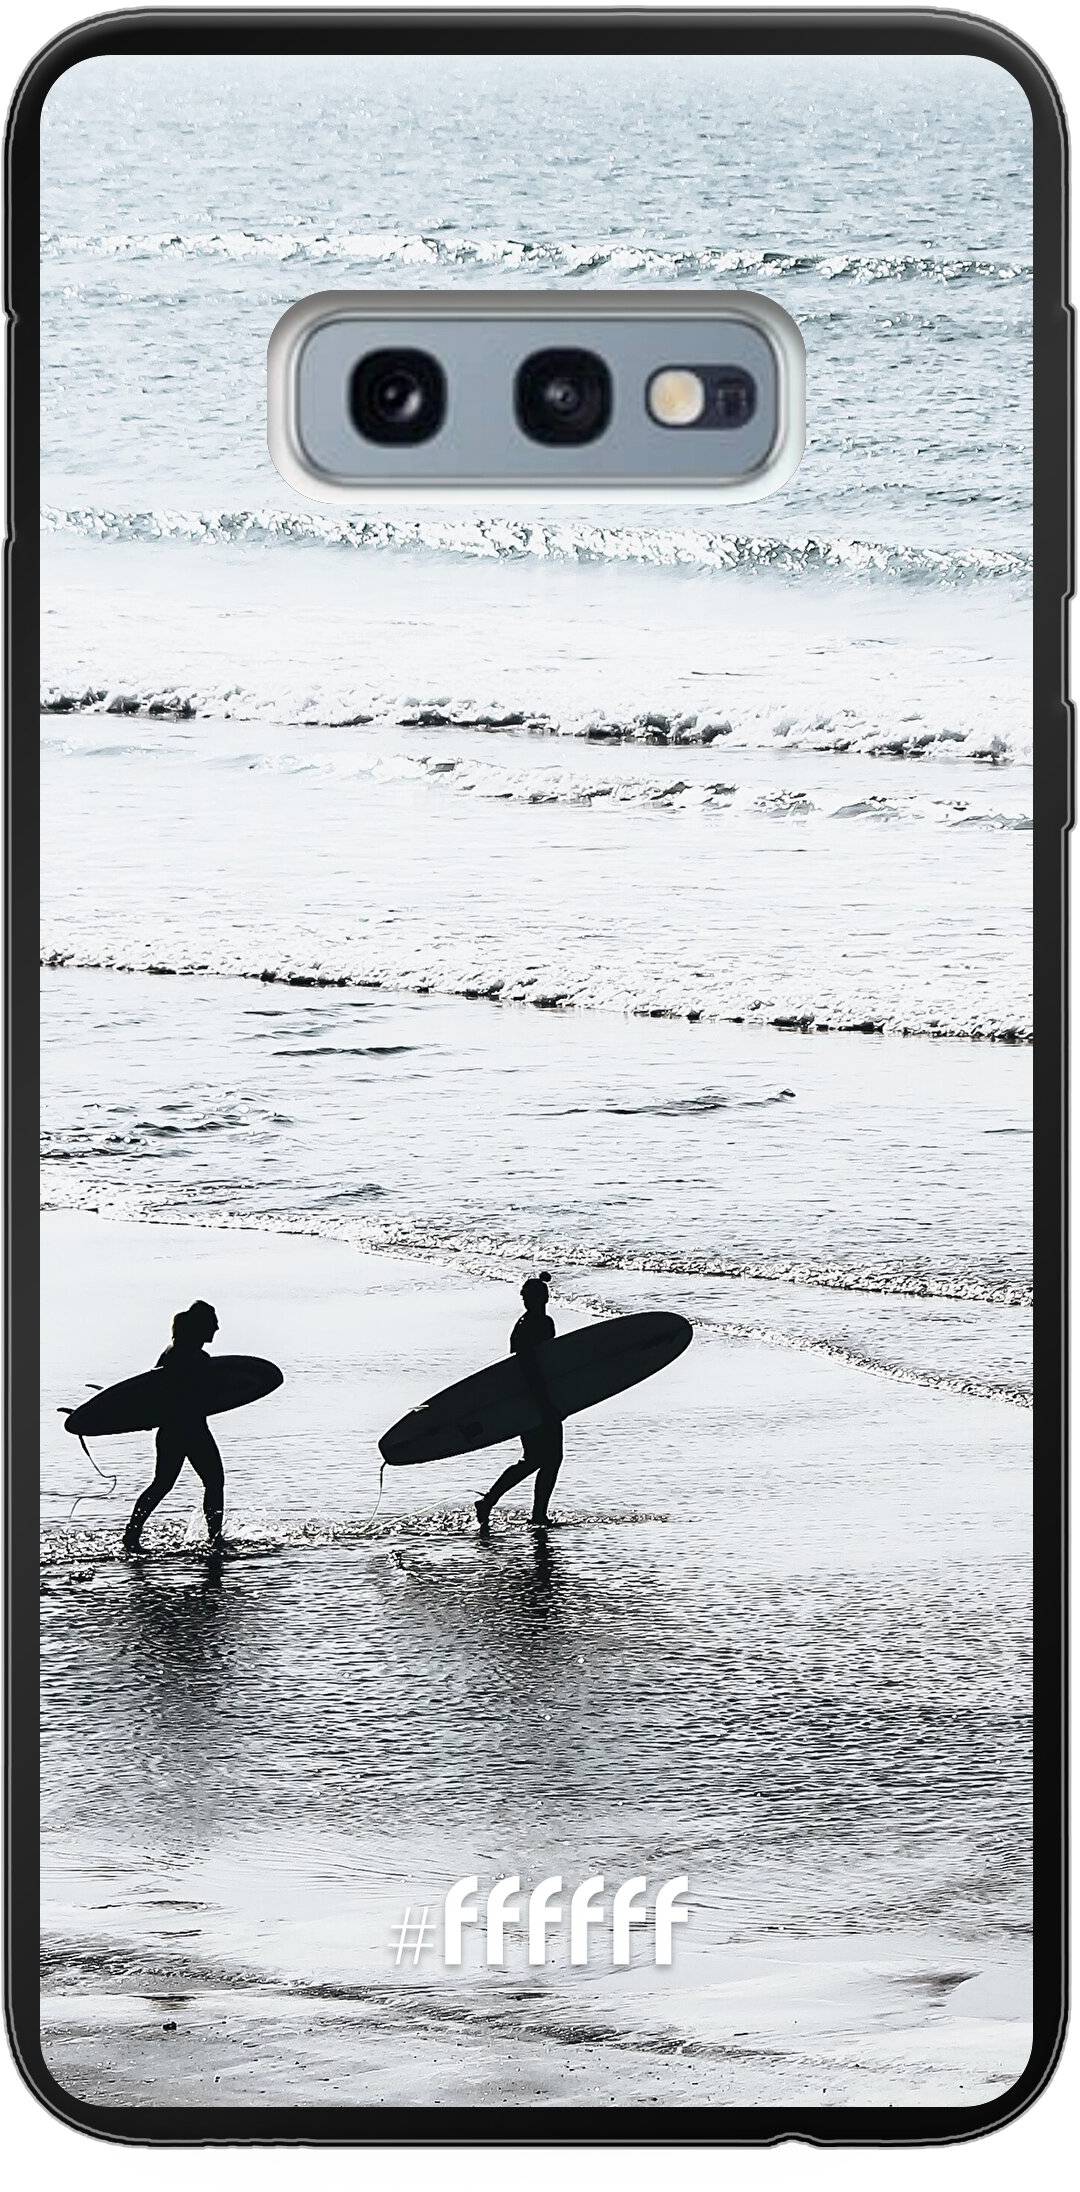 Surfing Galaxy S10e